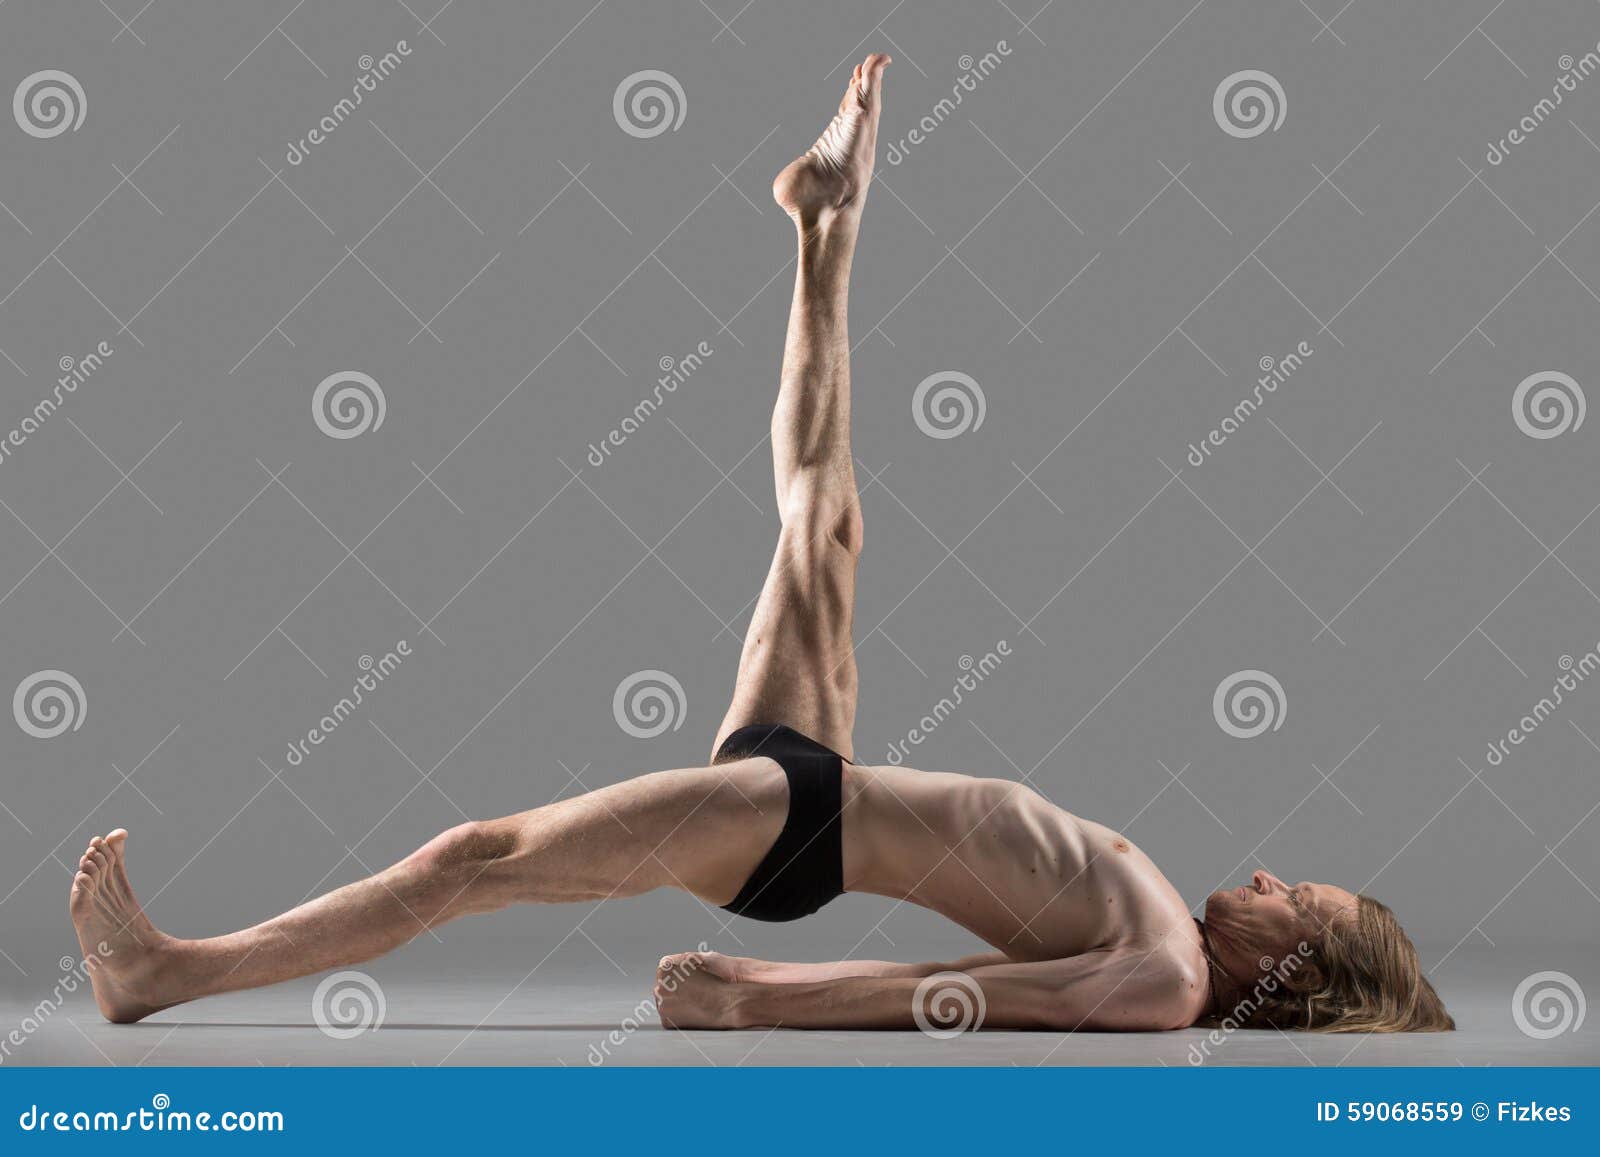 How to Do Bridge Pose in Yoga: 4 Bridge Pose Modifications - 2023 -  MasterClass